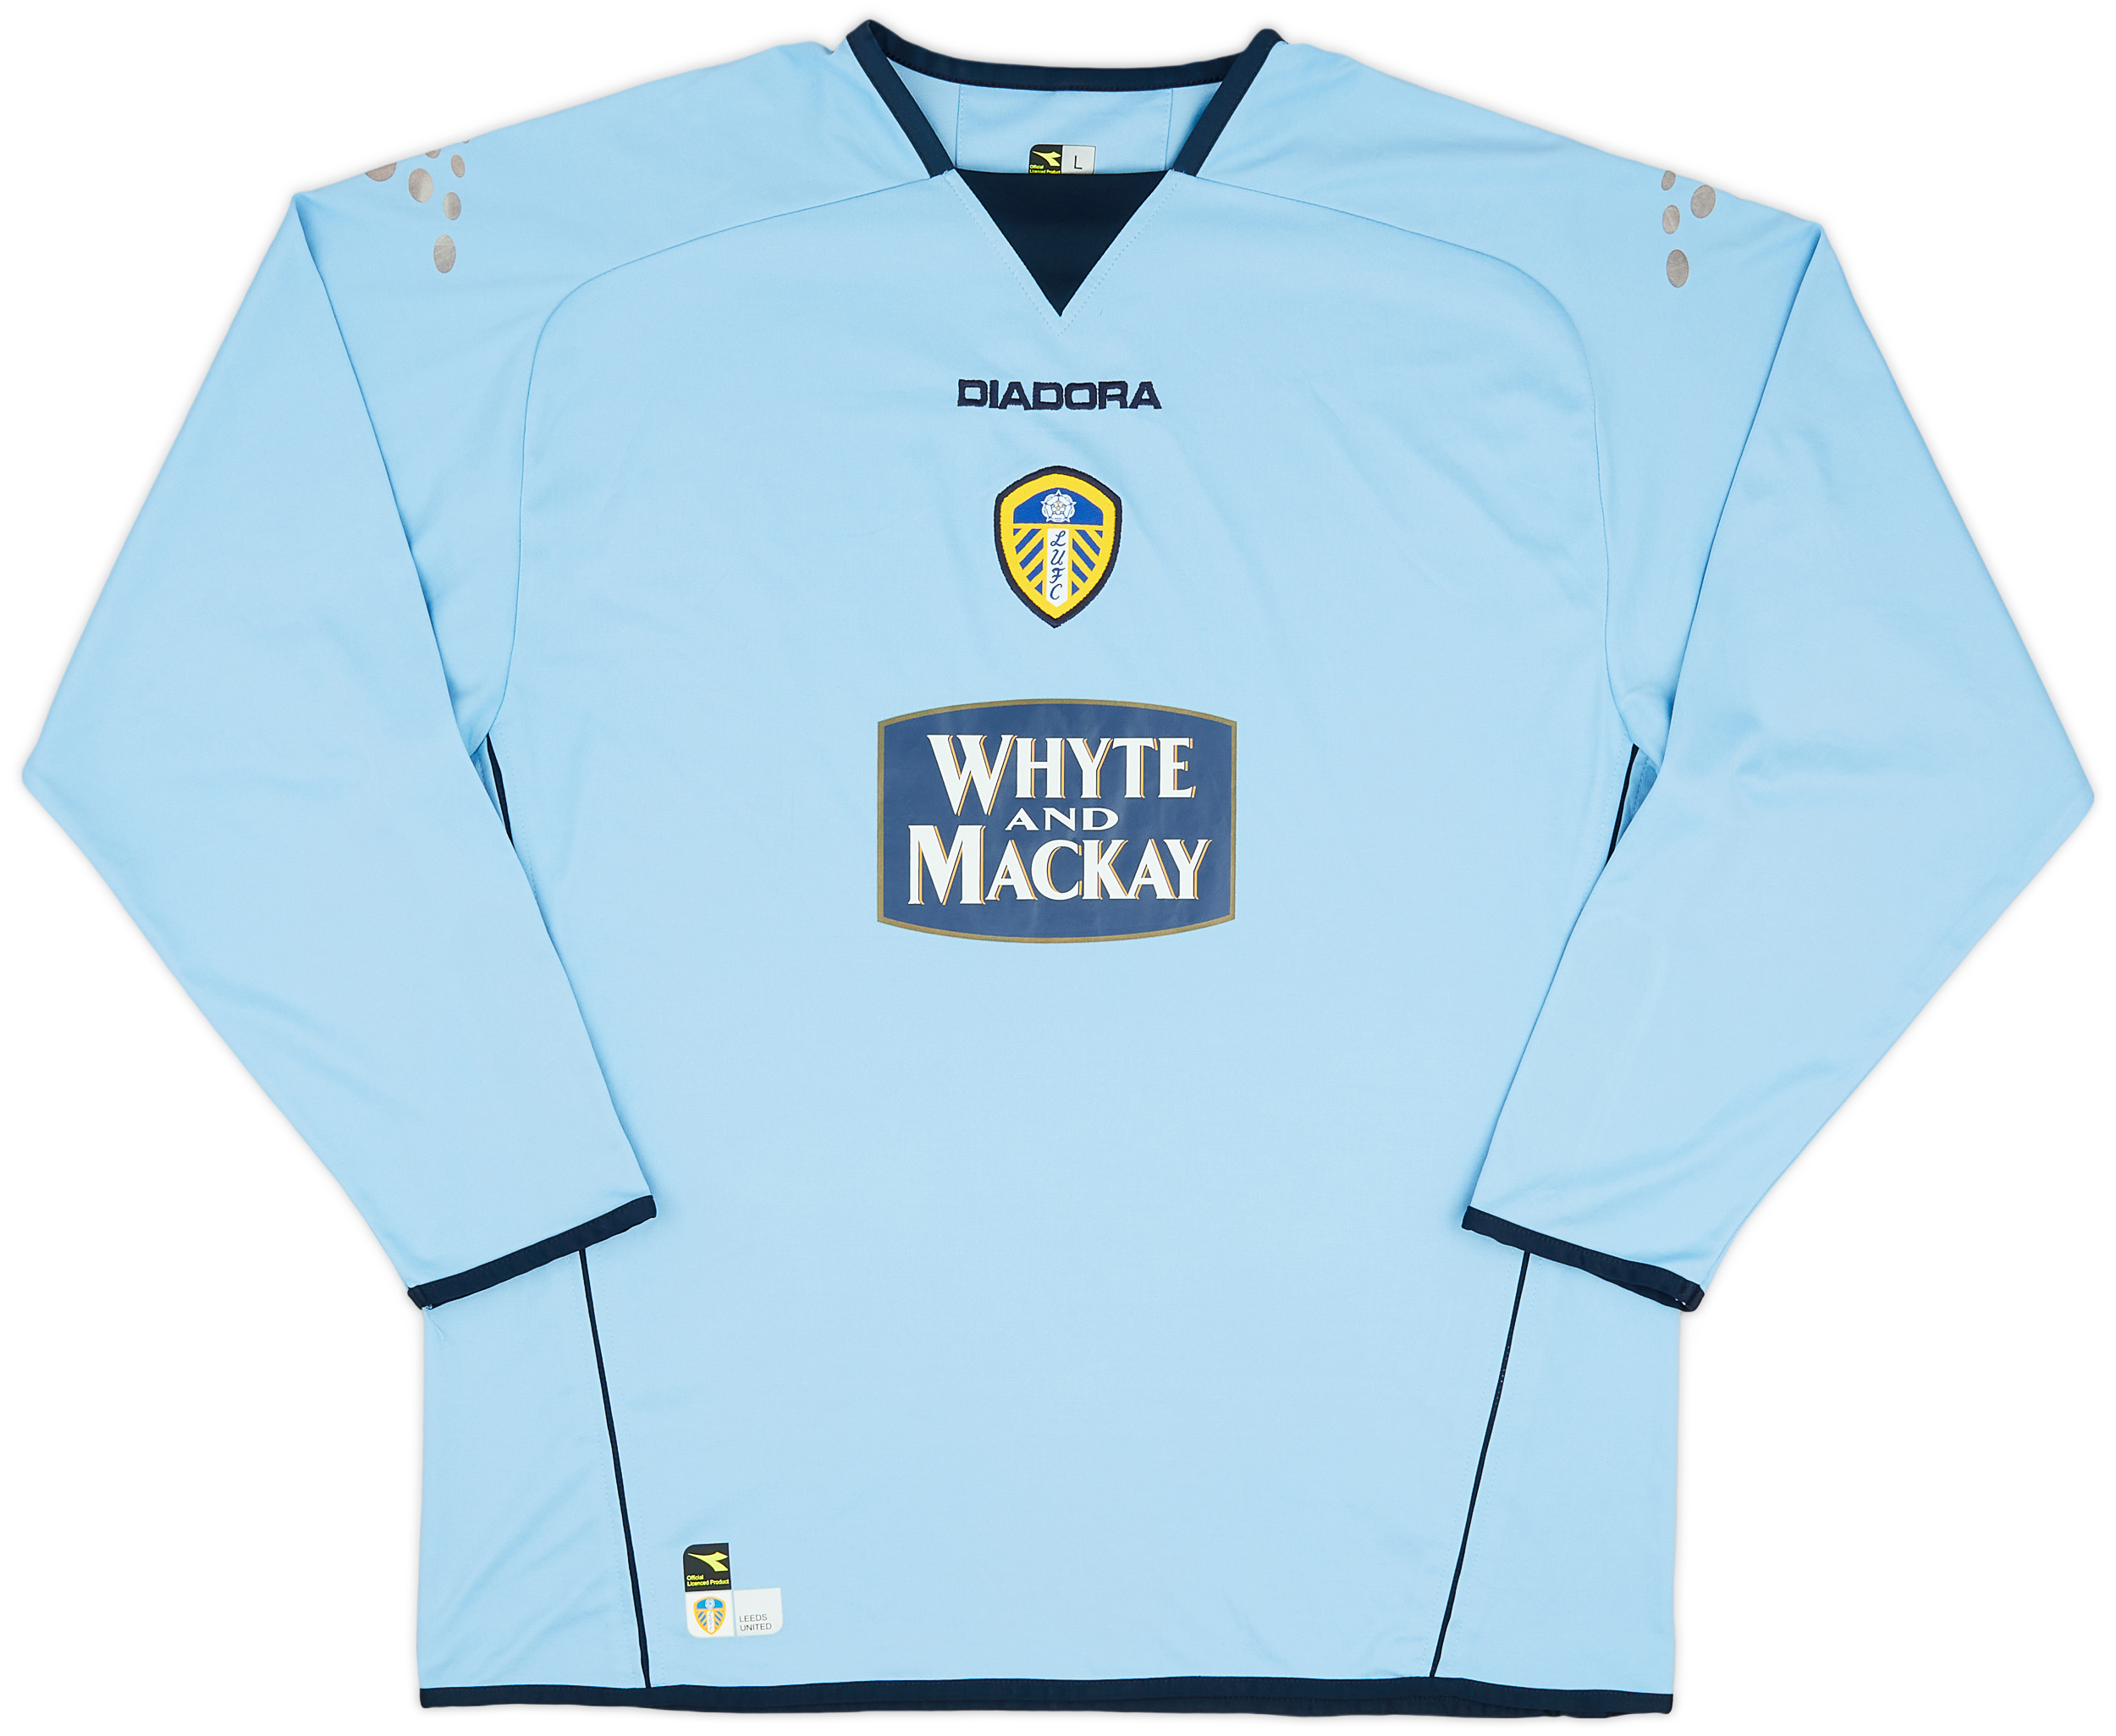 2004-05 Leeds United Away Shirt - 9/10 - ()